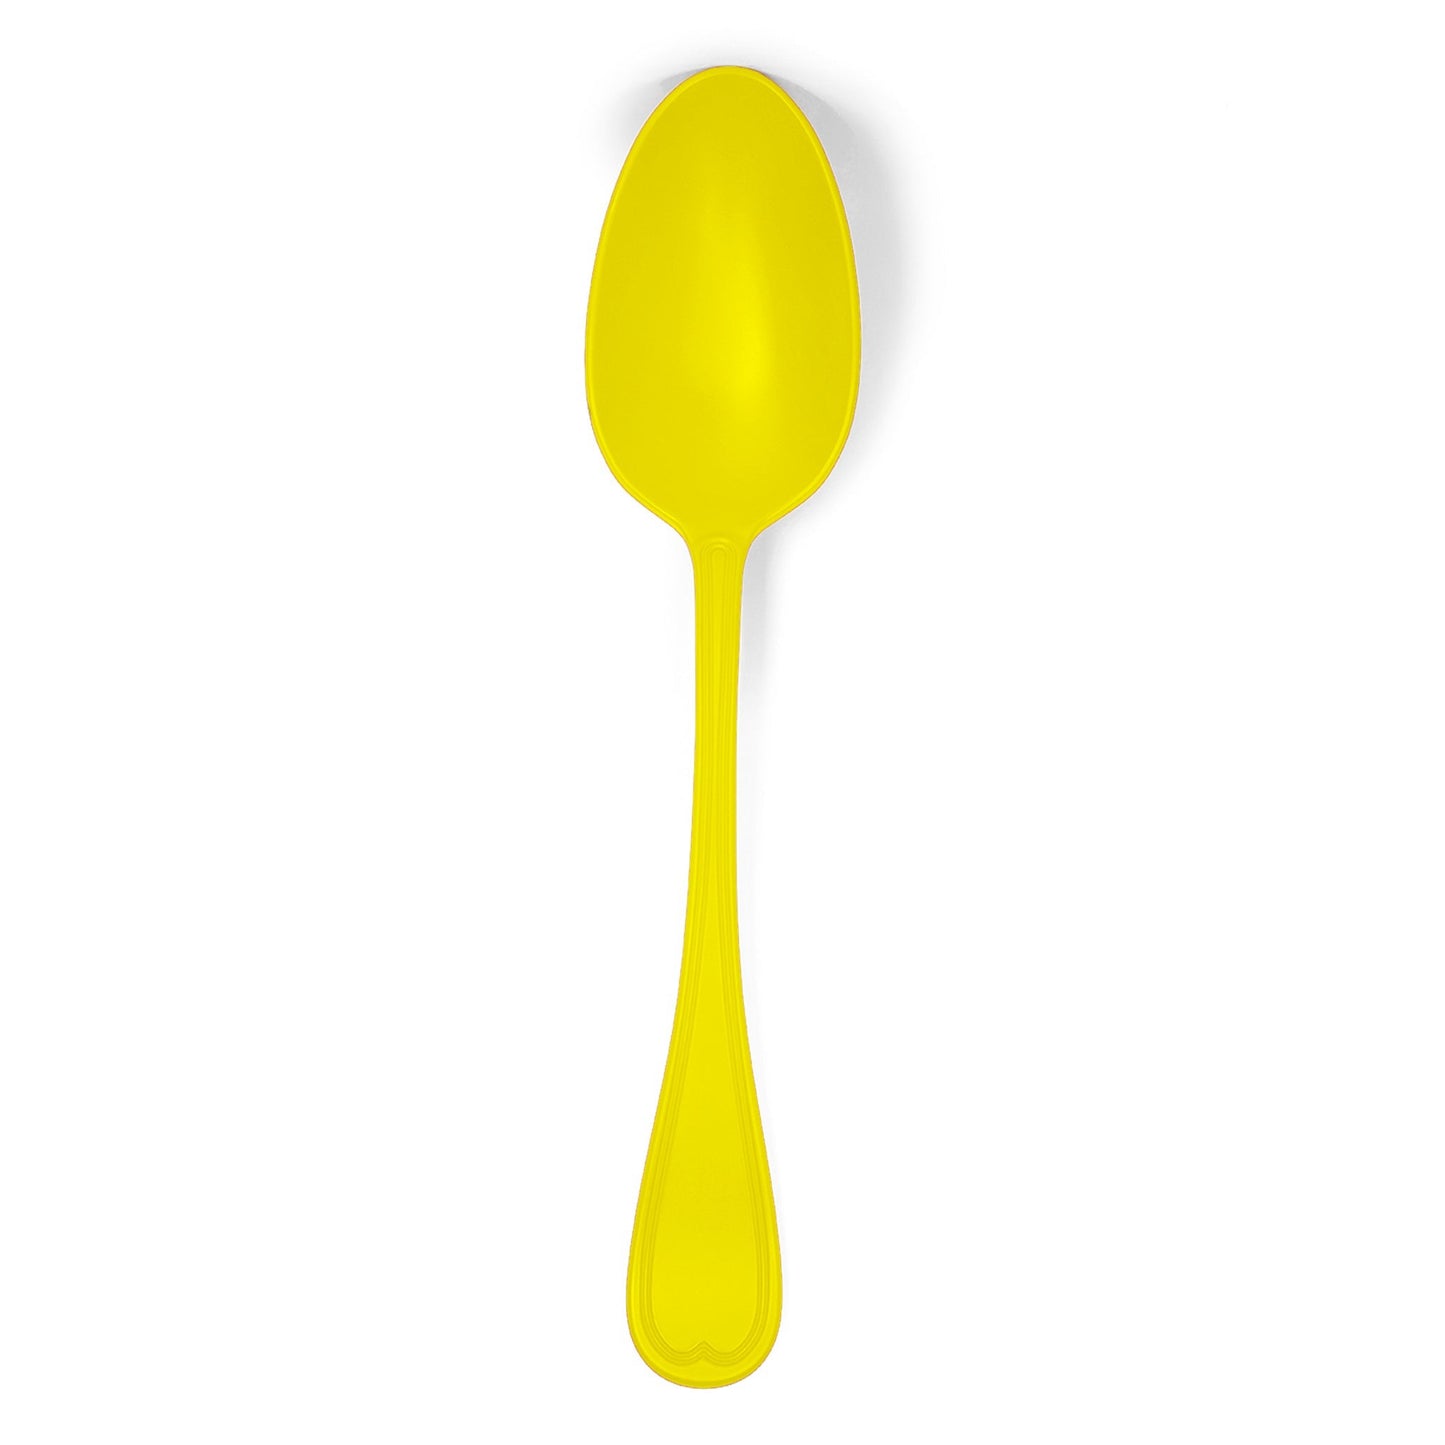 Spoon Yellow